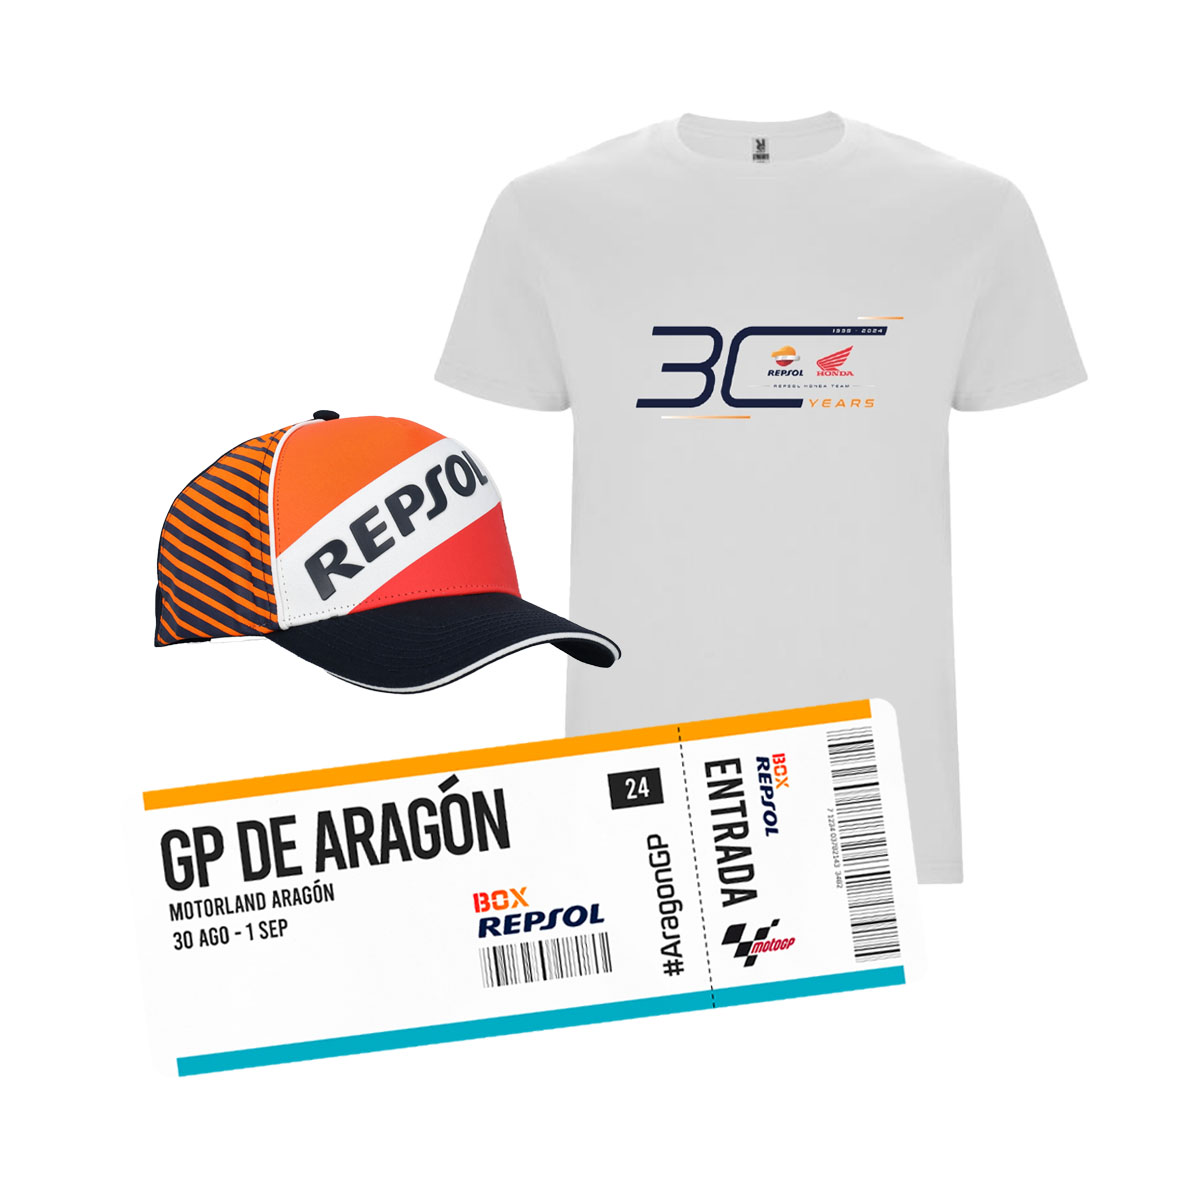 Pack MotoGP Aragón: entrada tribuna + gorra + camiseta